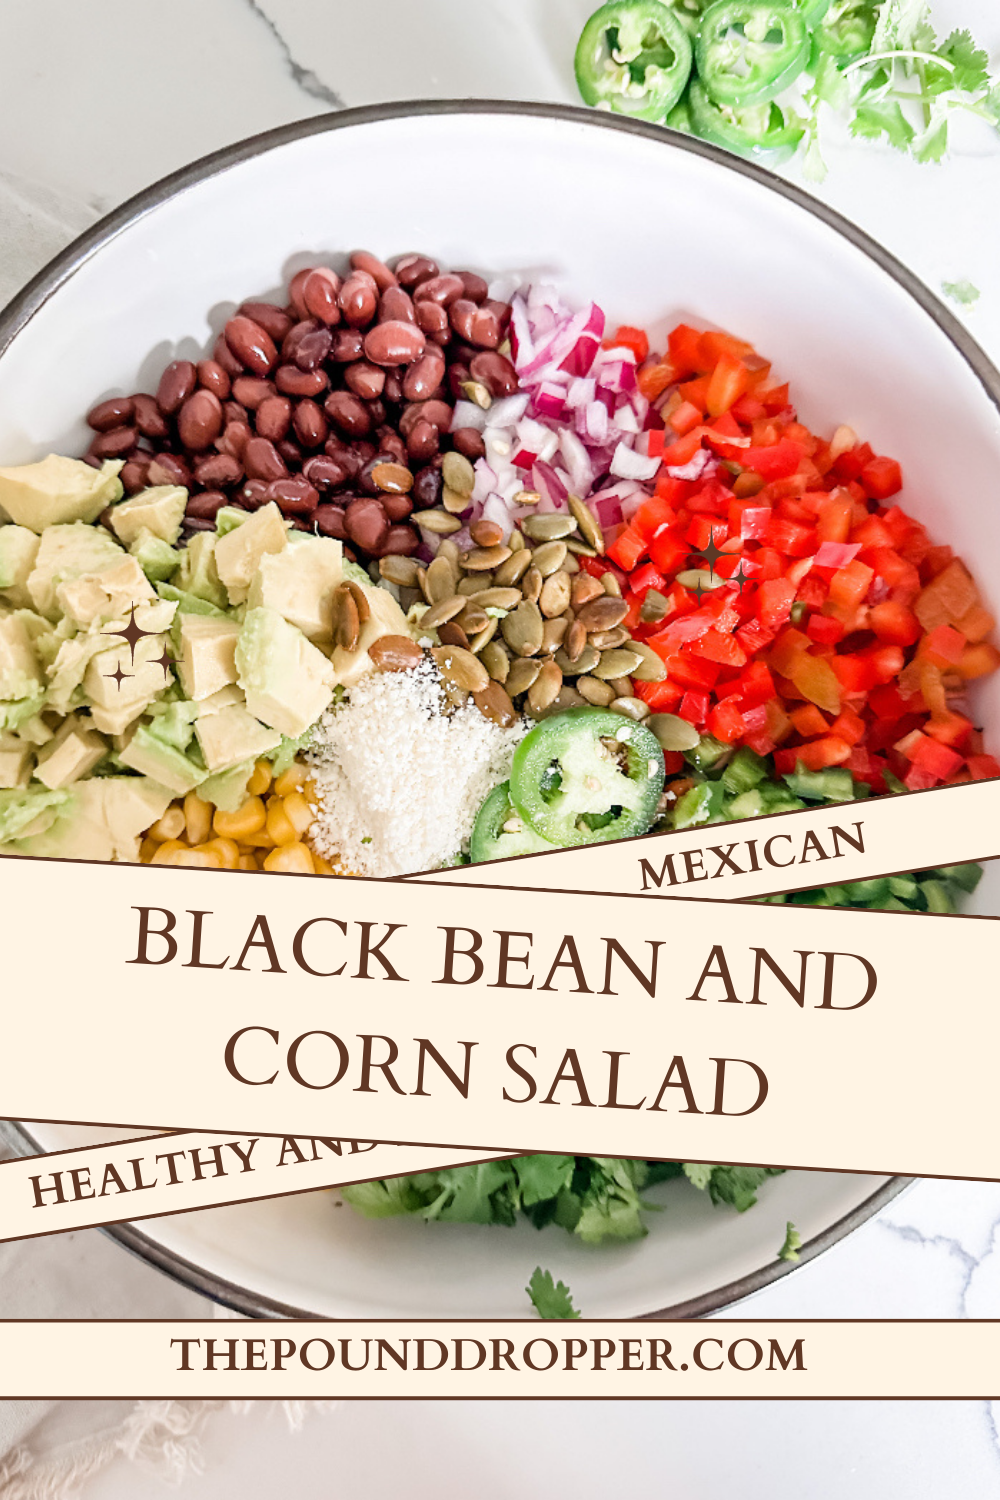 Mexican Black Bean and Corn Salad via @pounddropper